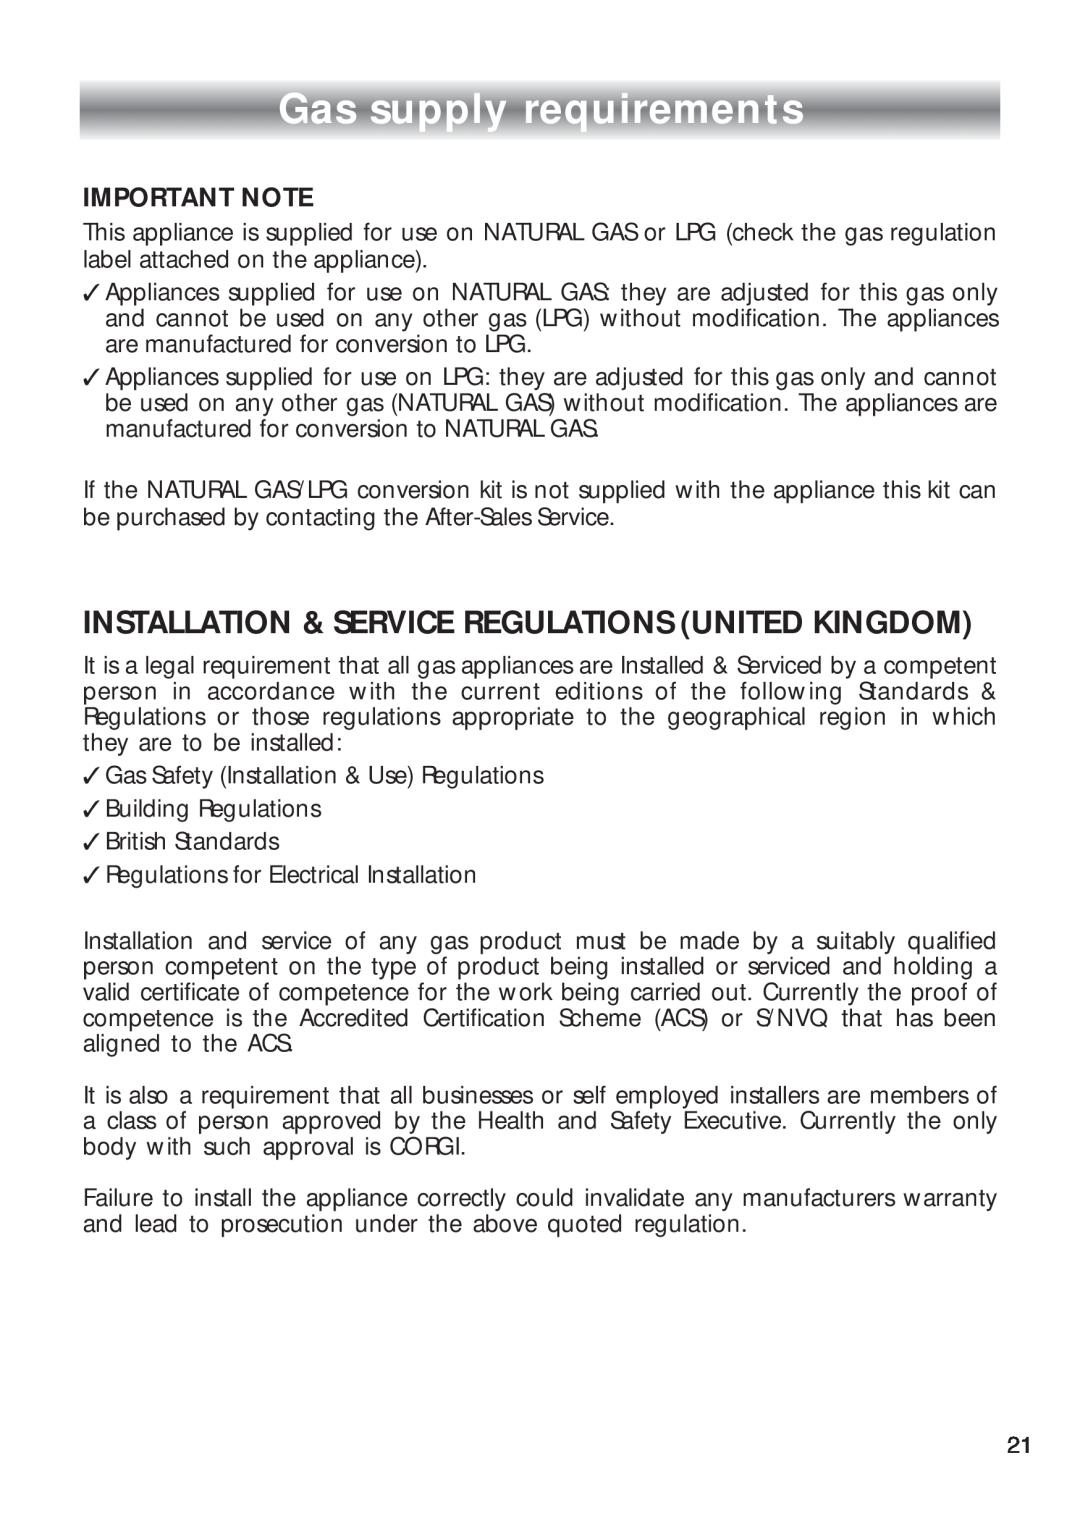 CDA HCG 730, HCG 740 installation instructions Gas supply requirements, Installation & Service Regulations United Kingdom 